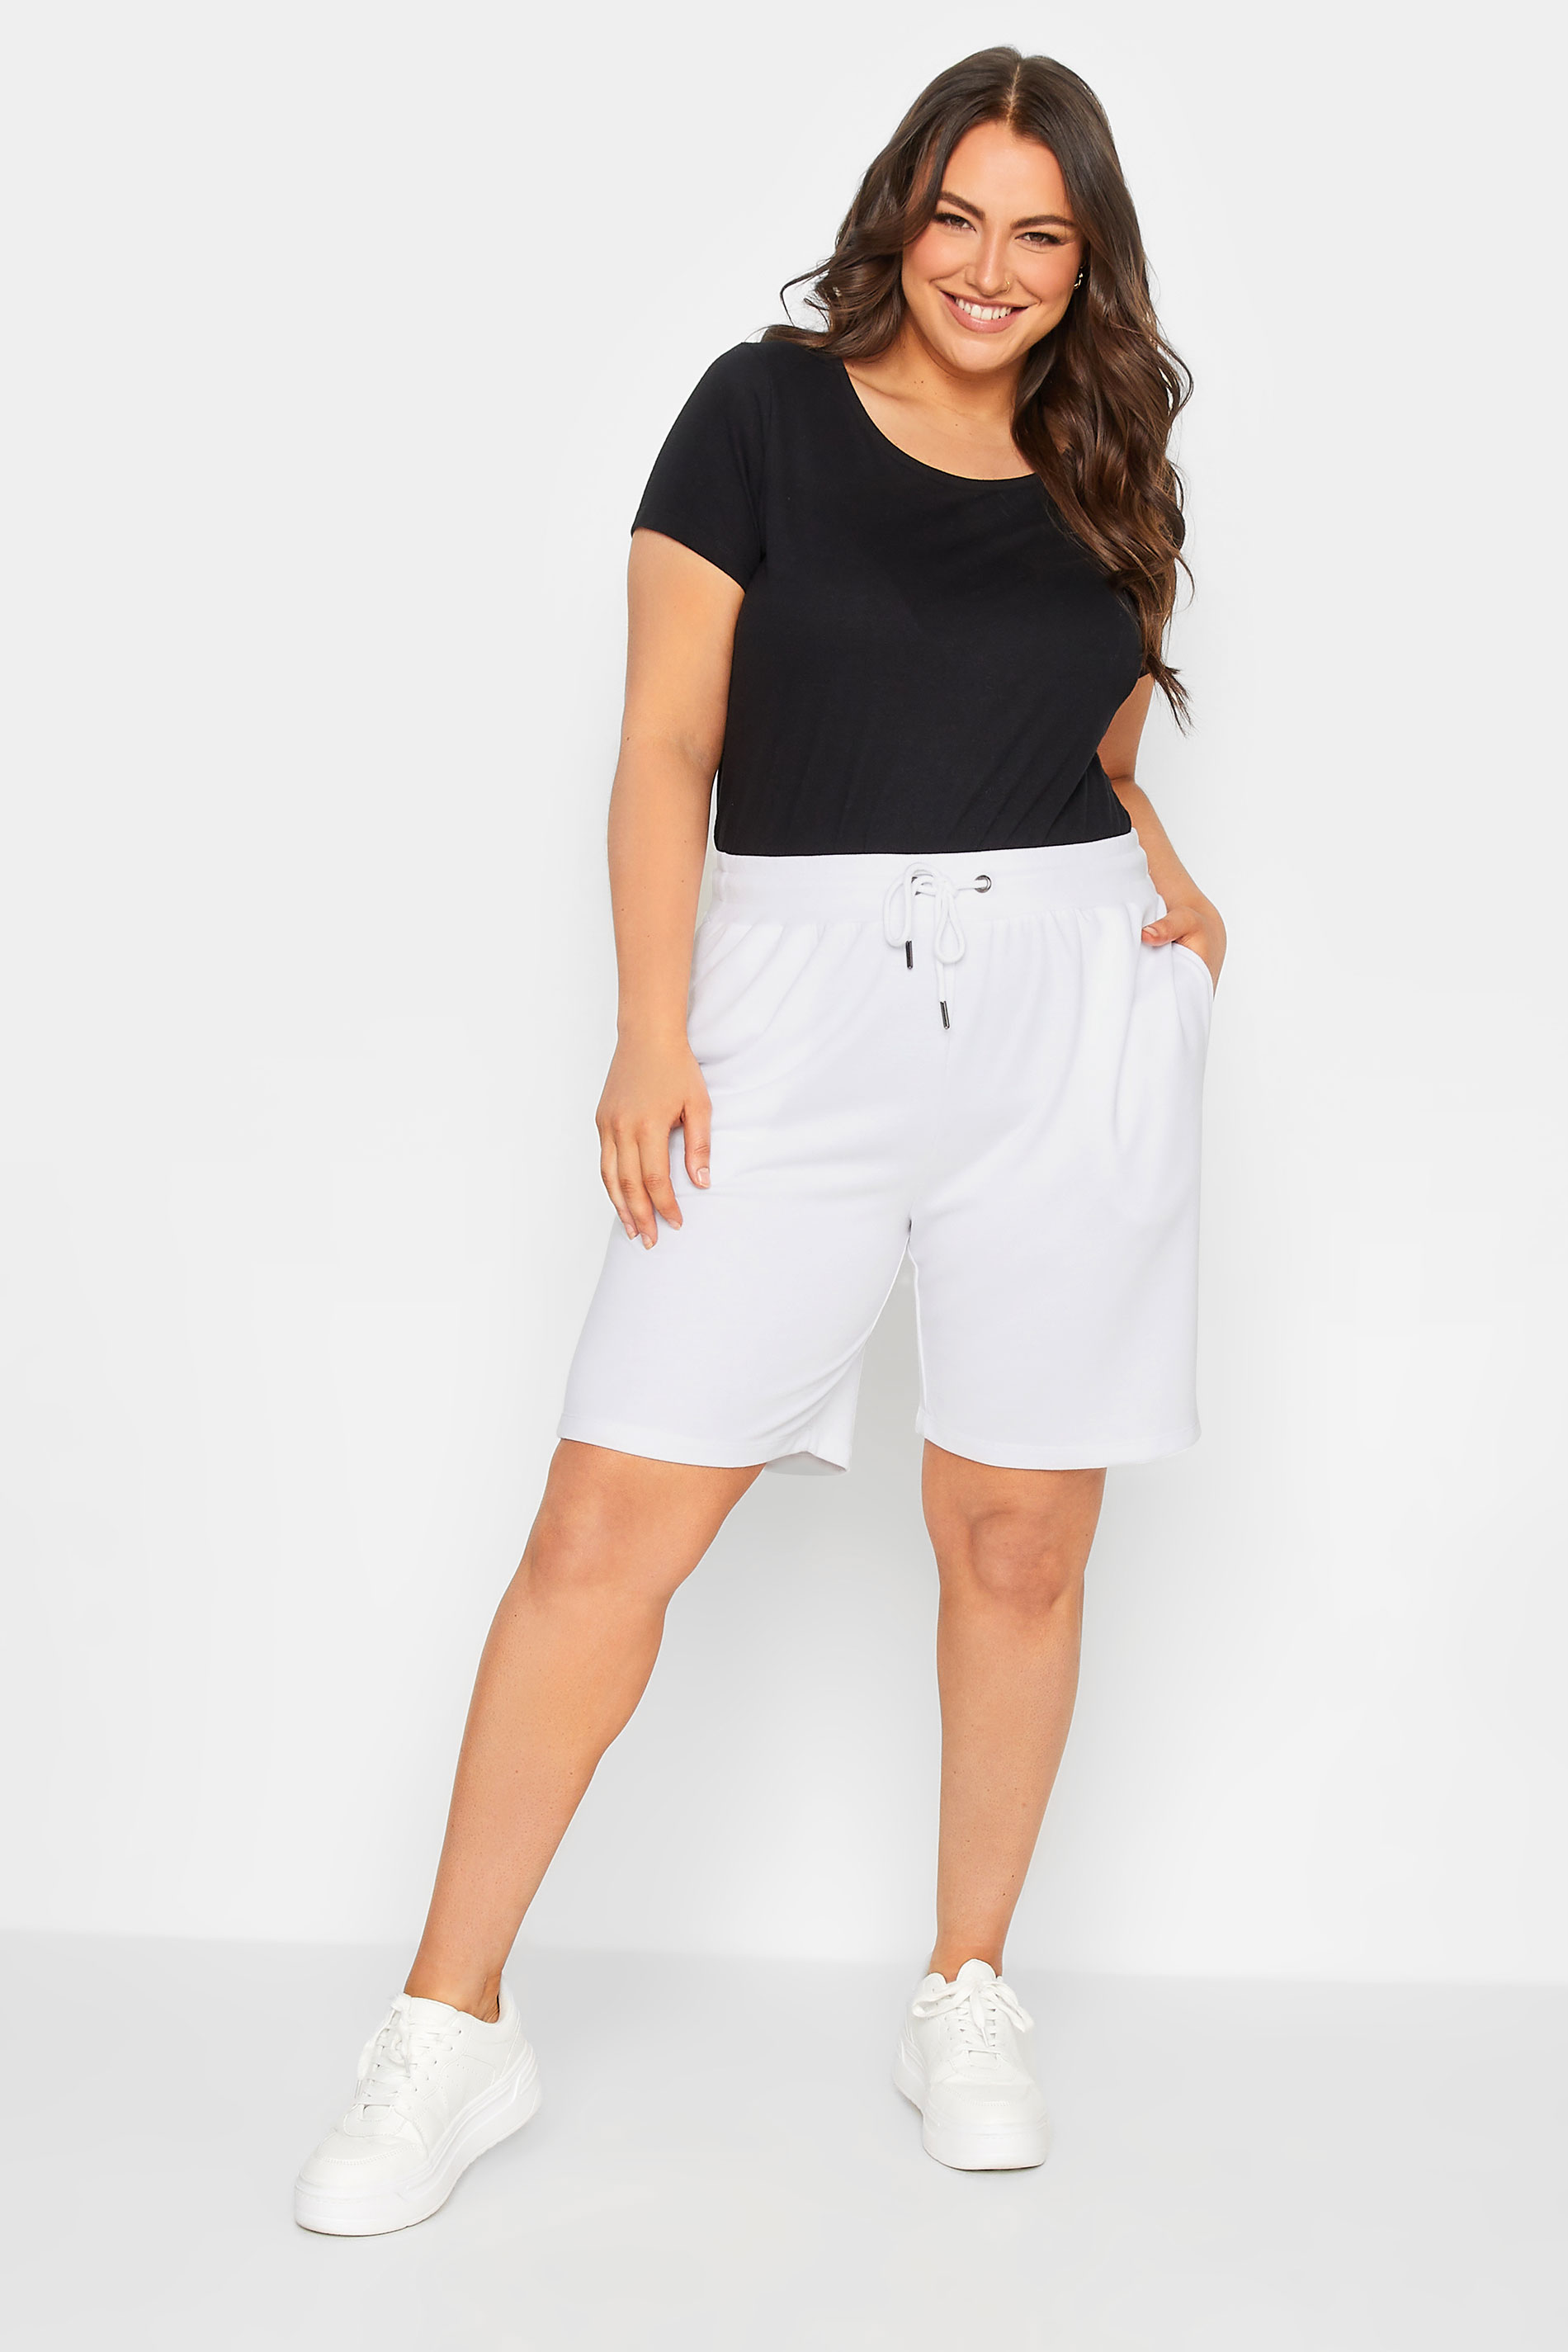 YOURS Plus Size White Jogger Shorts | Yours Clothing 2